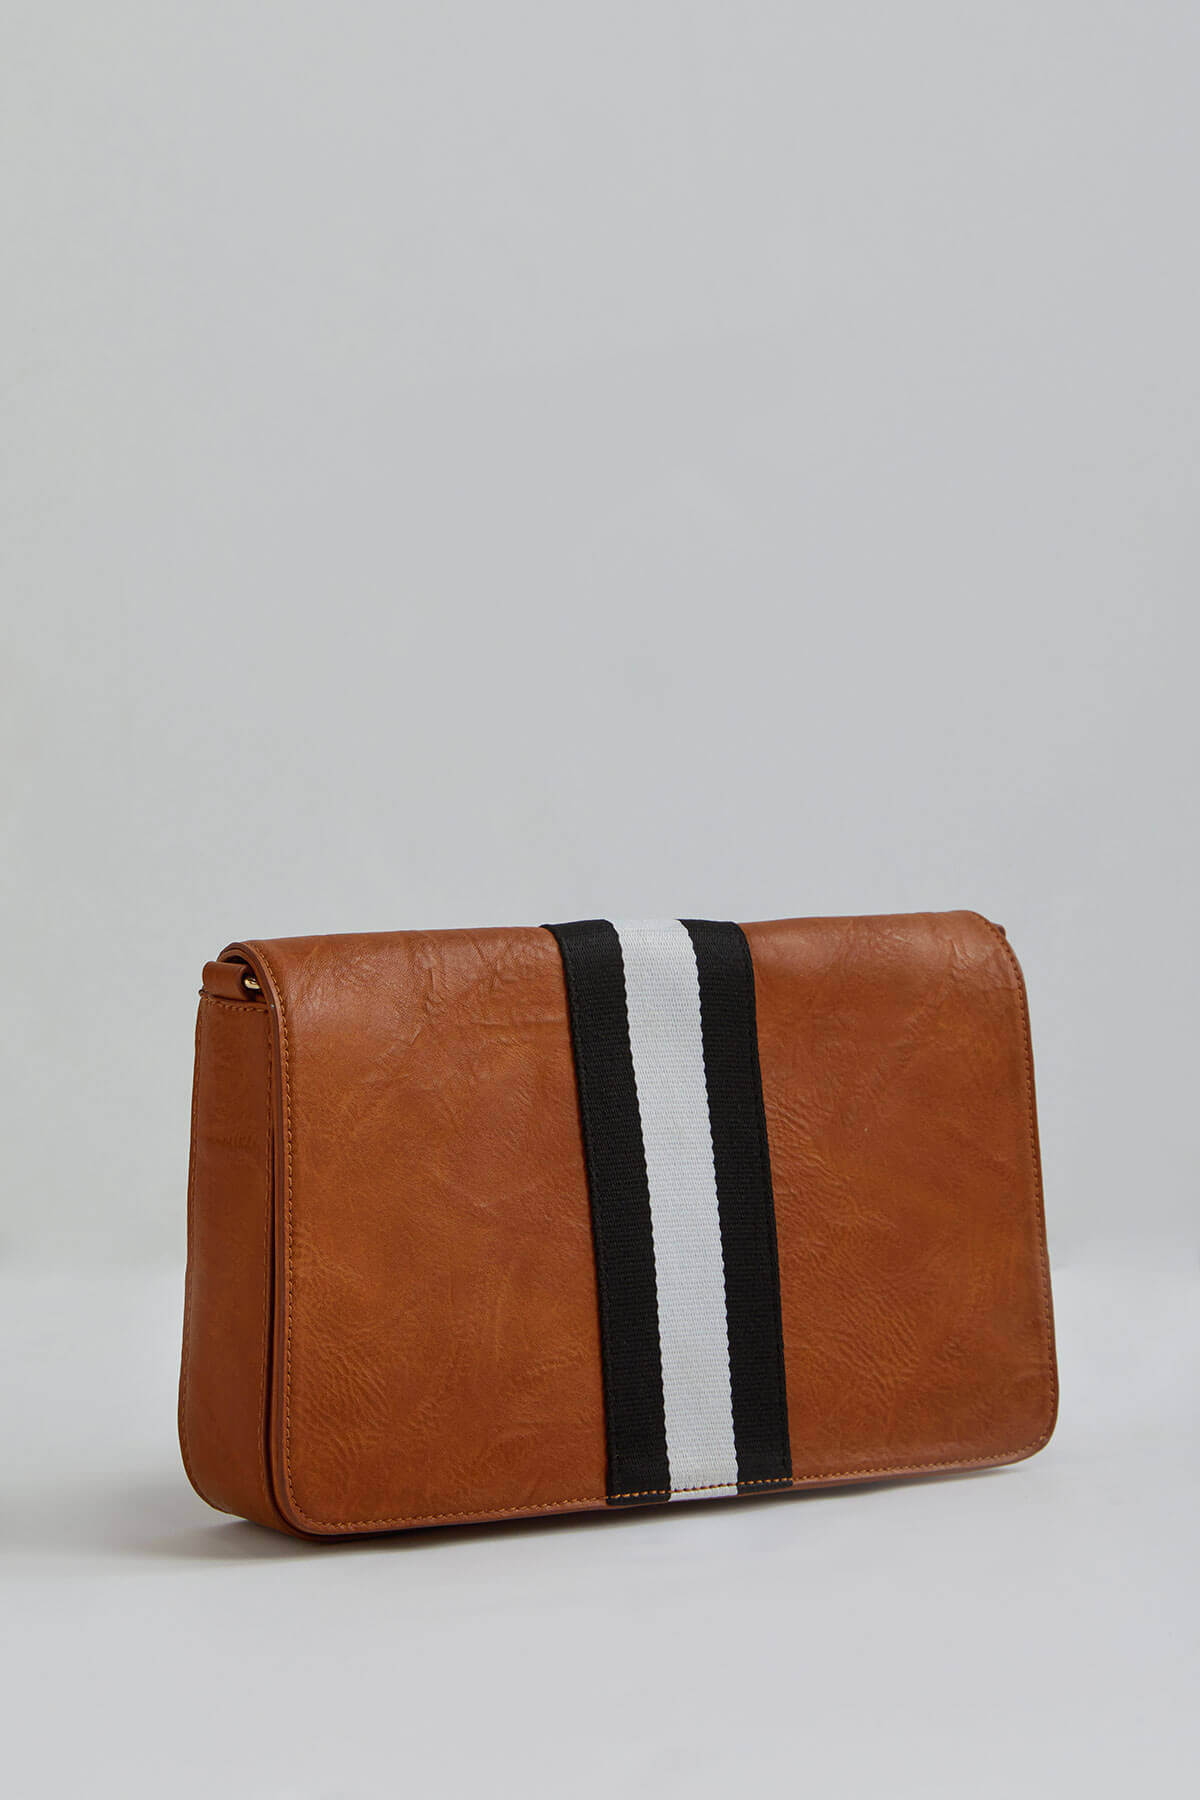 Midi Sac Leather Crossbody Bag/Clutch